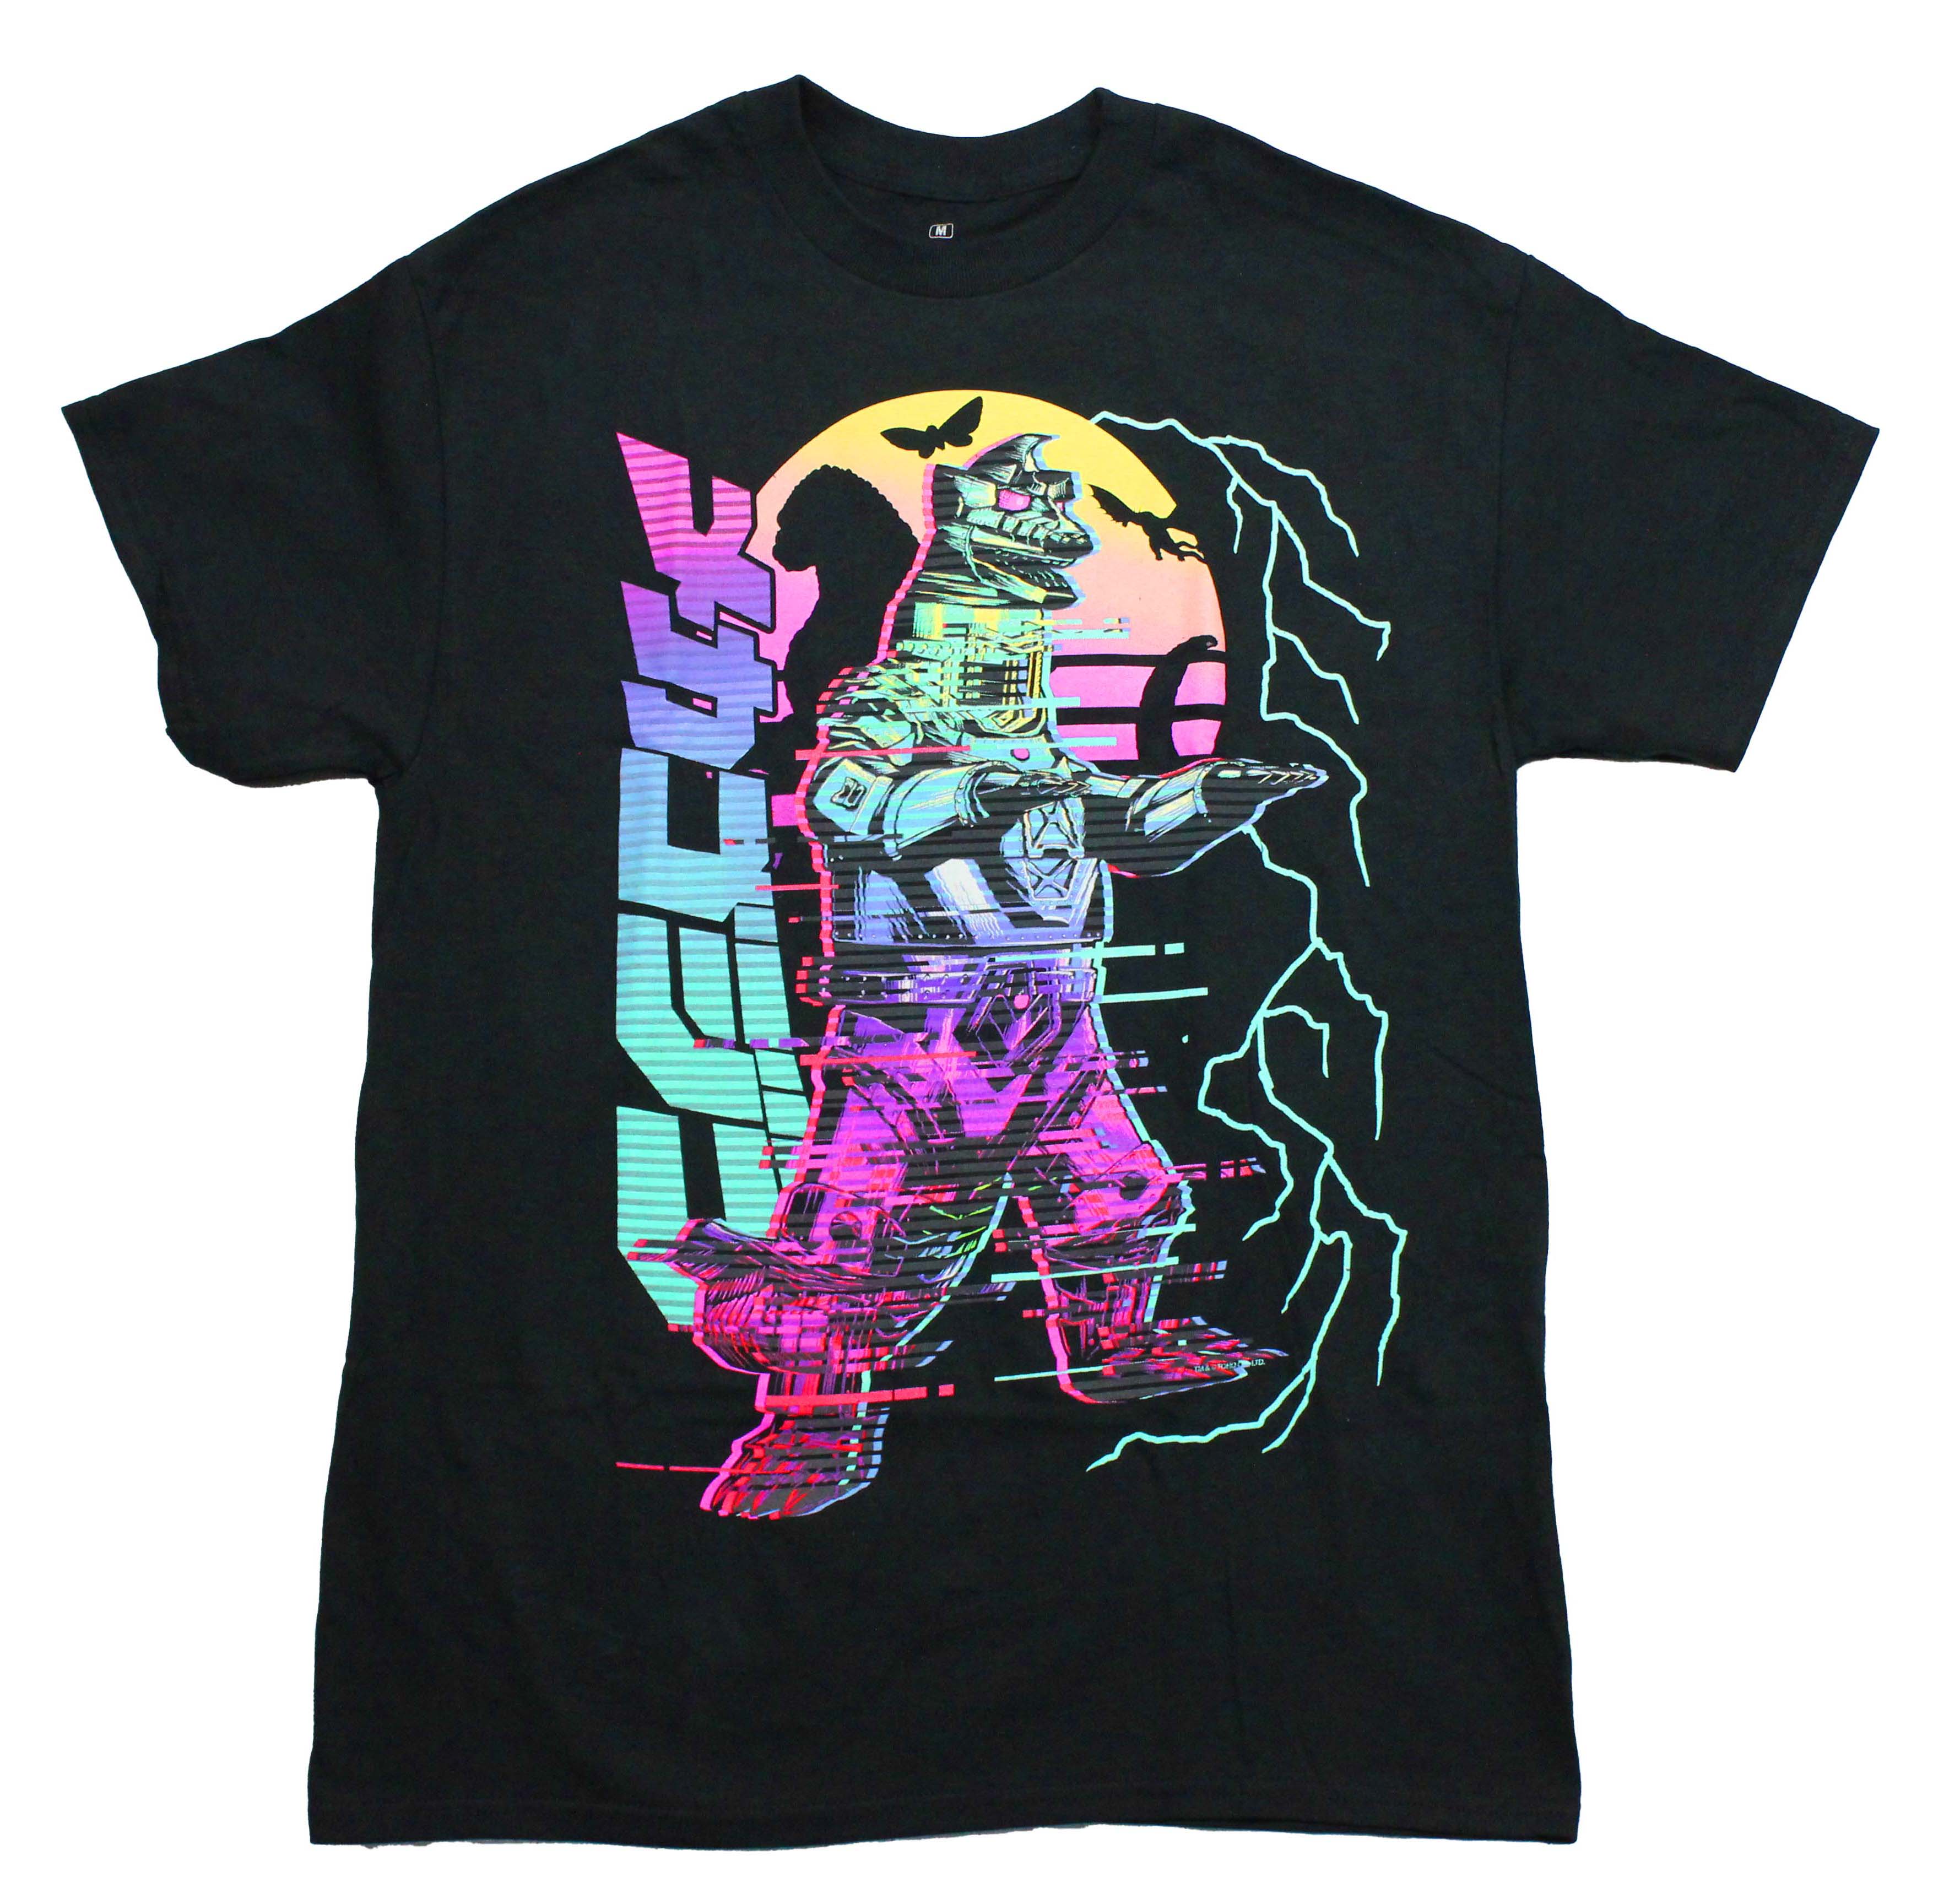 Godzilla MechaGodzilla Mens T-Shirt - Godzilla: Mechagodzilla Neon Vaporwave